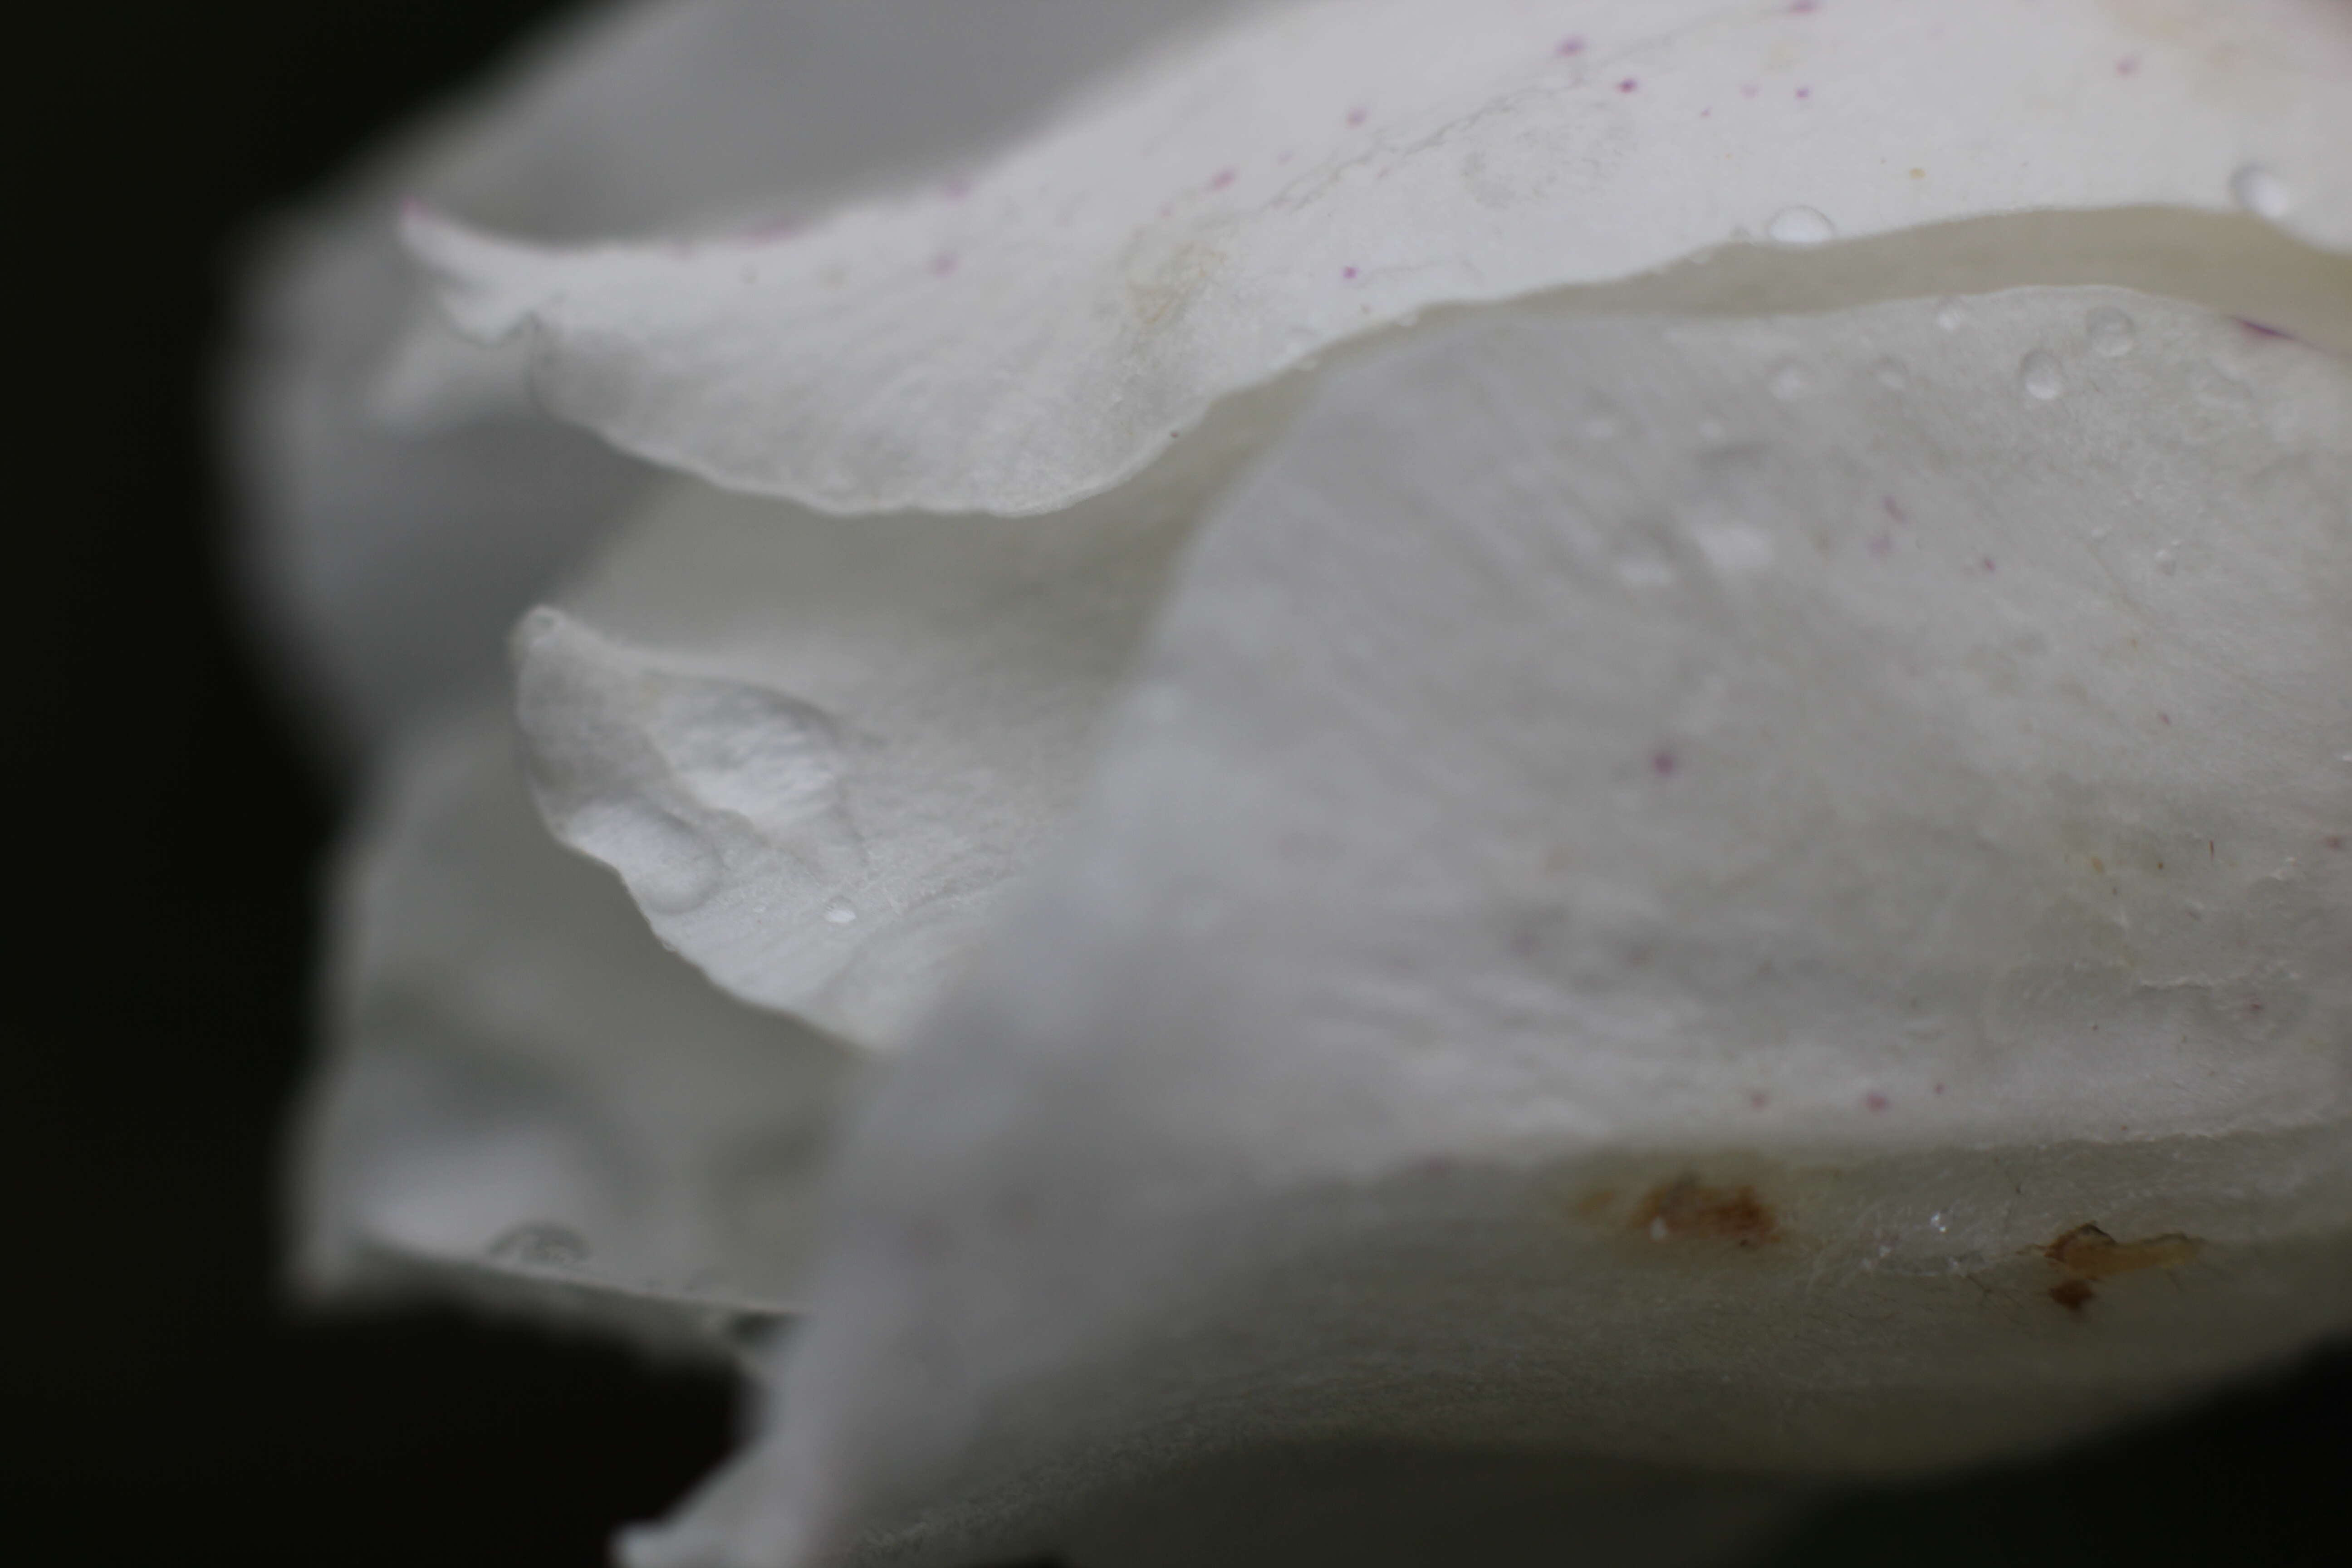 Image of Snowdrop Anemone